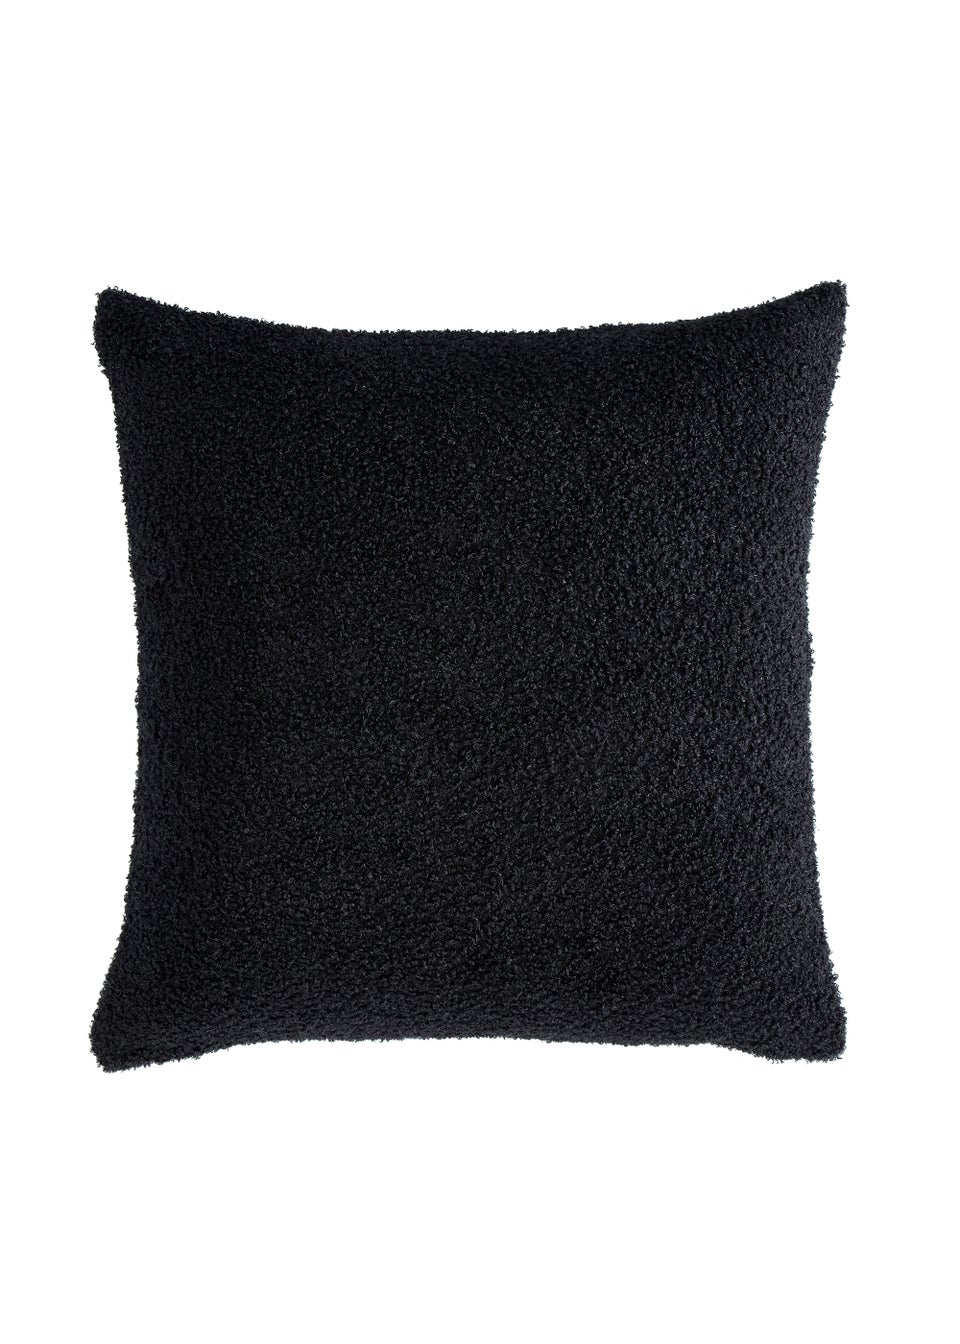 Catherine Lansfield Soft Boucle Cushion (45x45cm)